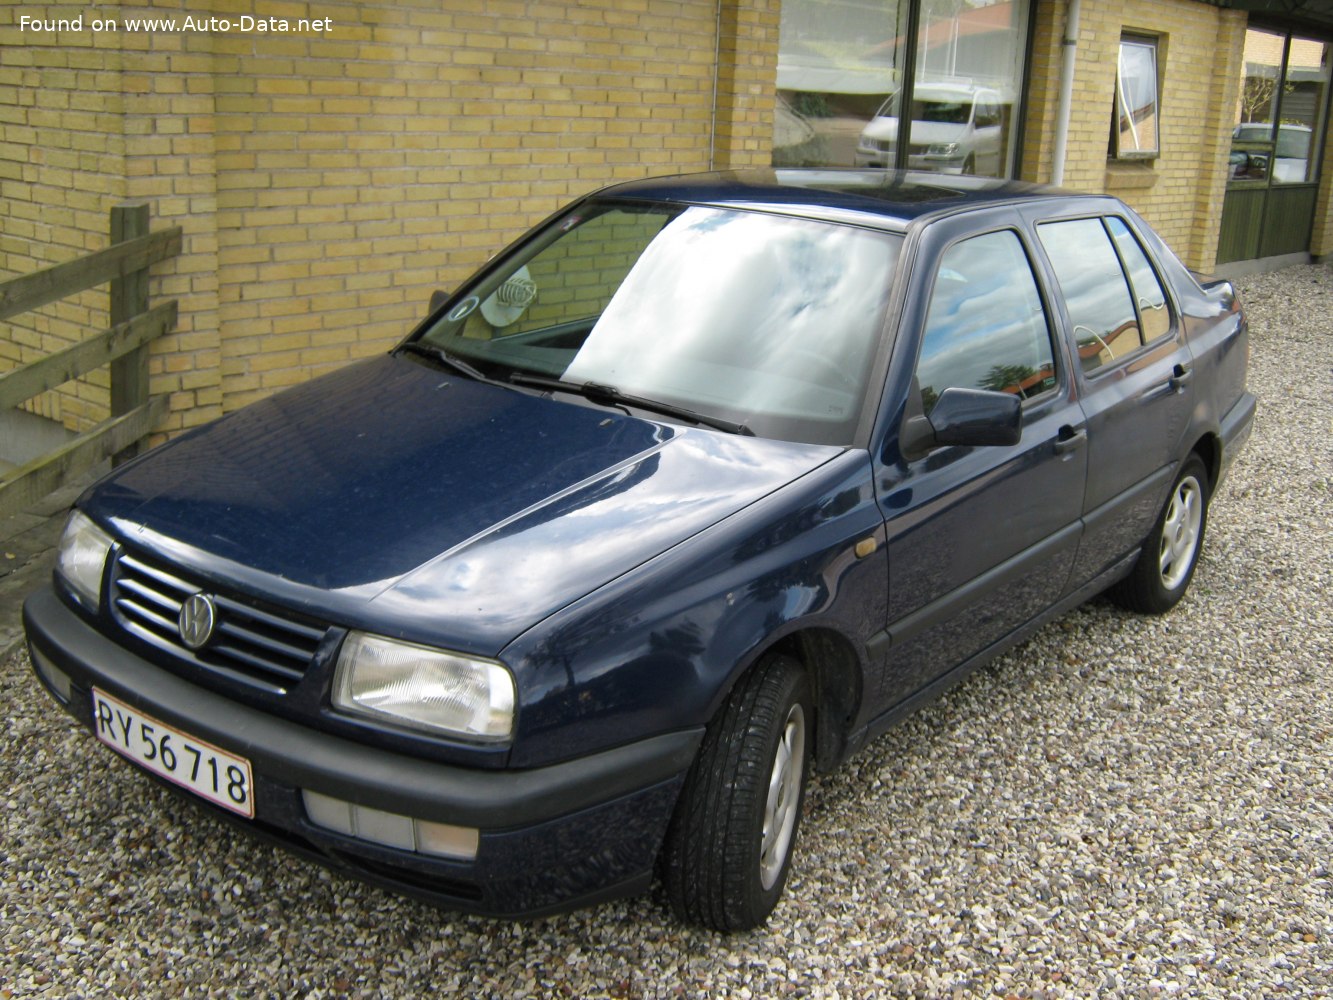 1992 Volkswagen Vento (1HX0) 1.8 (75 Hp) Technical specs